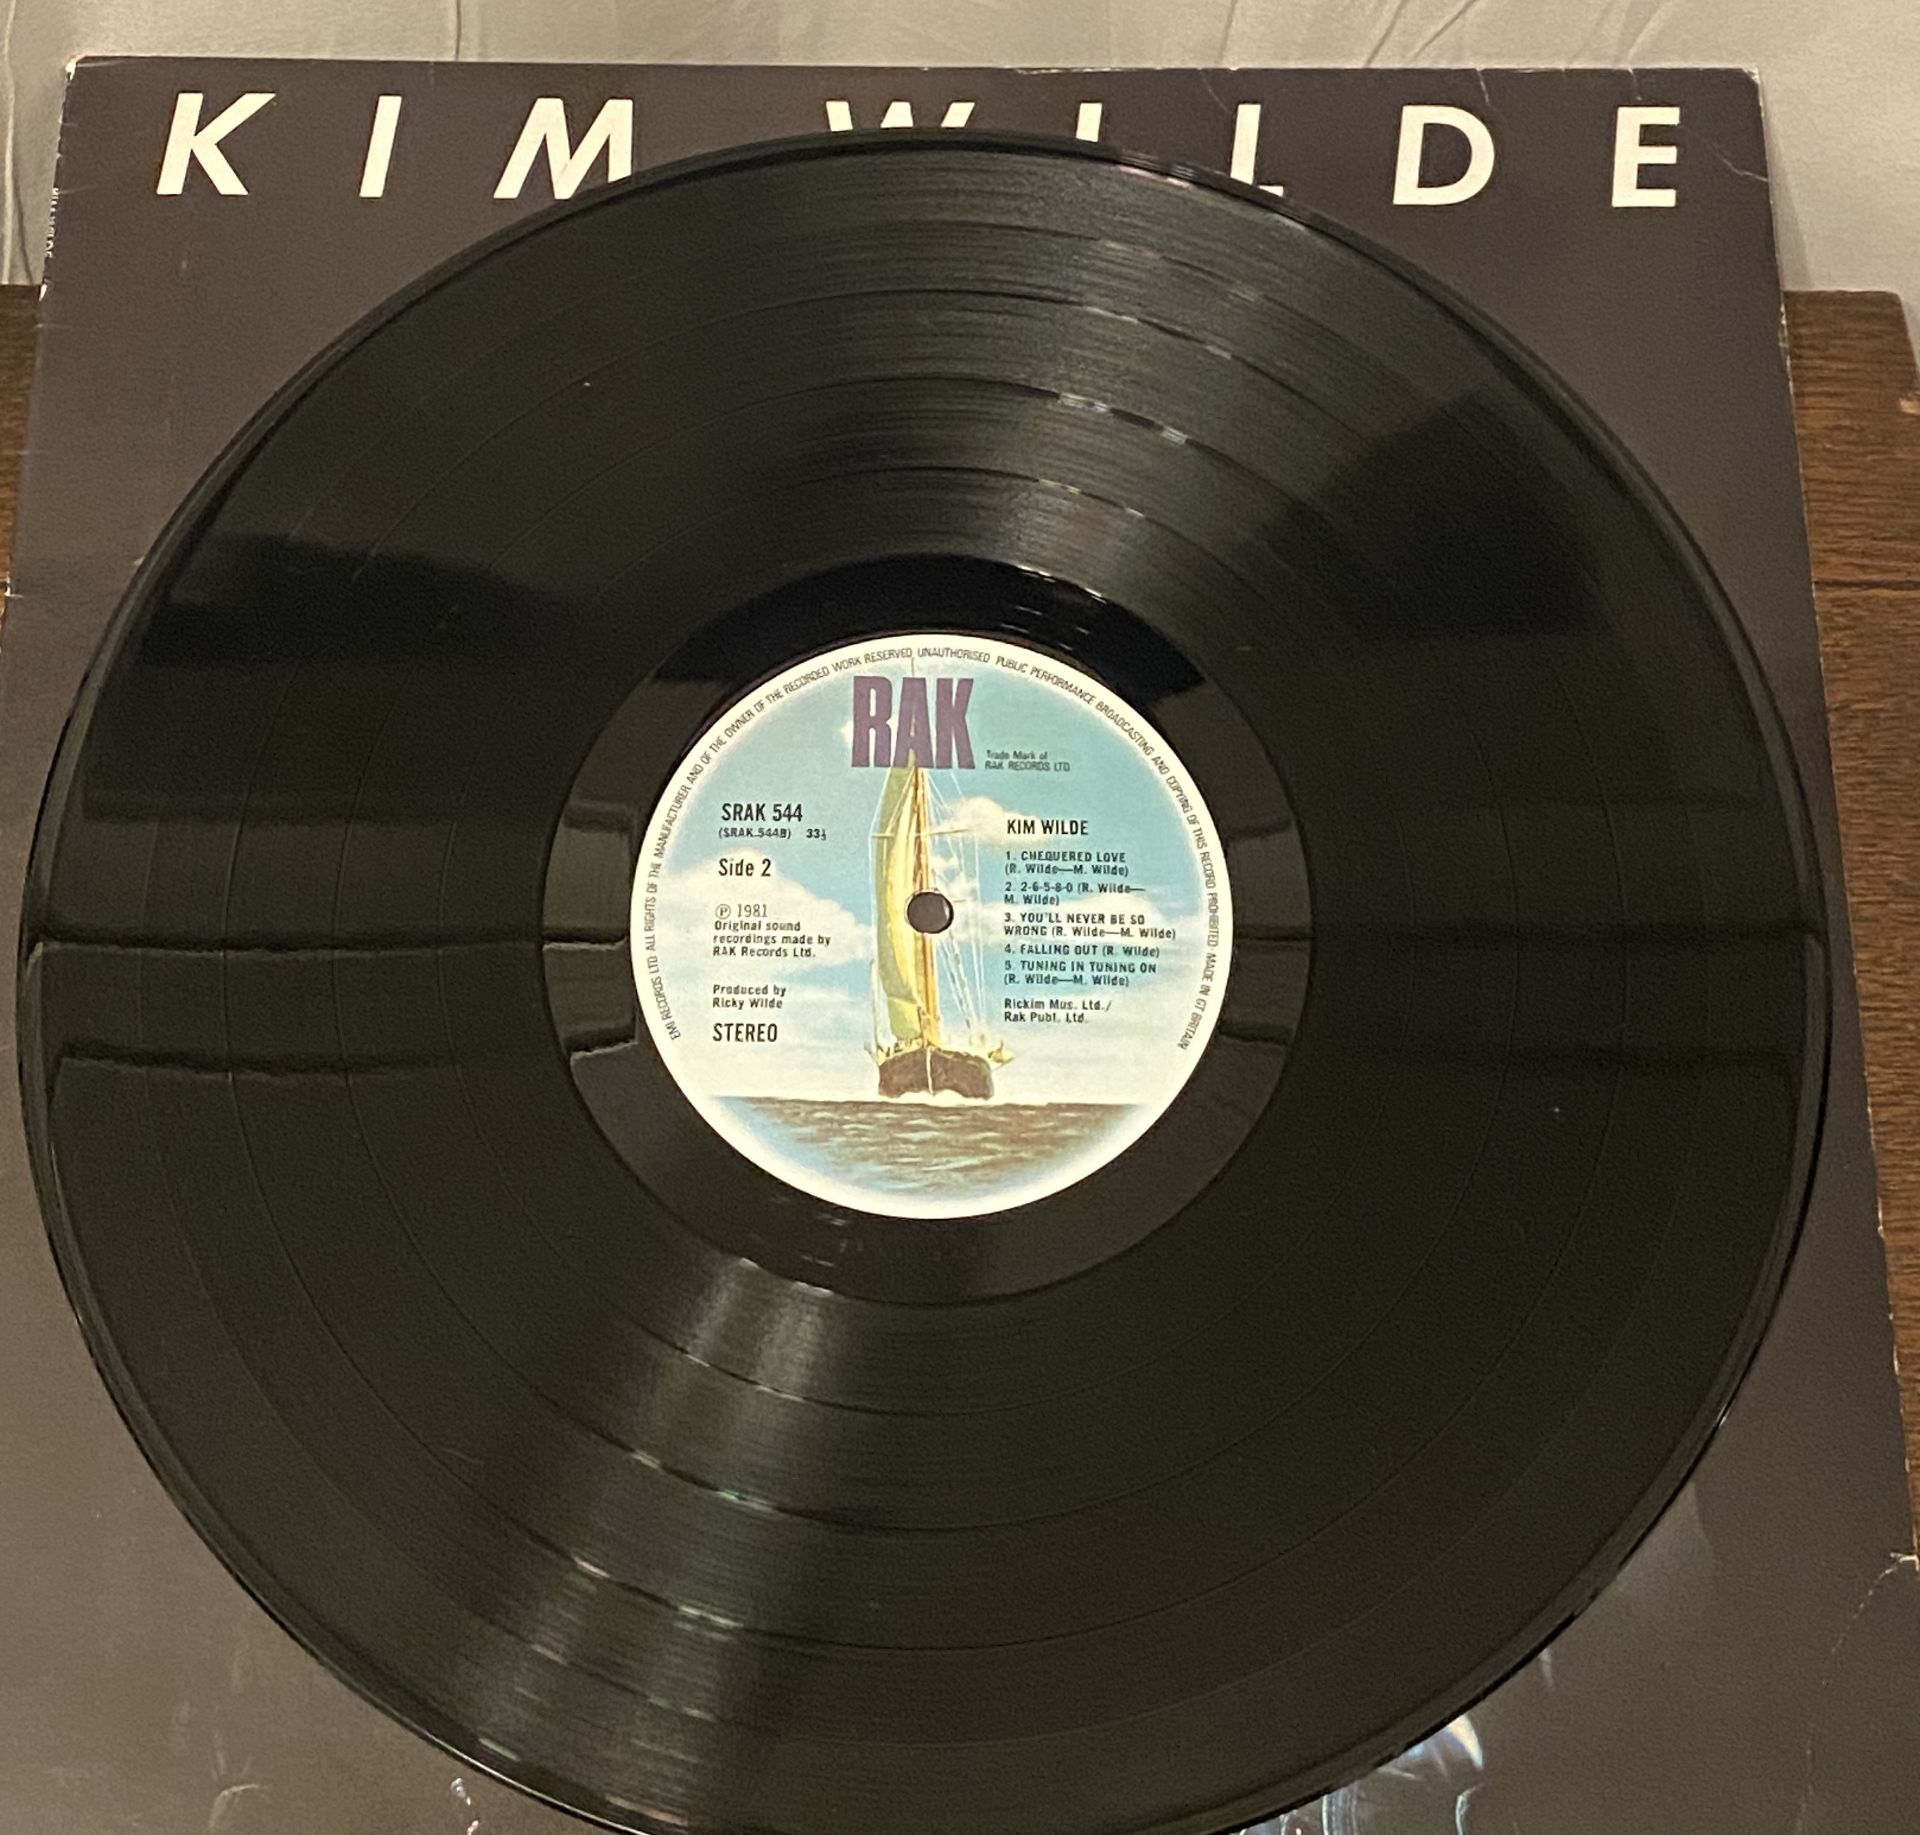 Kim Wilde Signed LP - Alan Partridge LP - The Firm LP. - Image 5 of 20